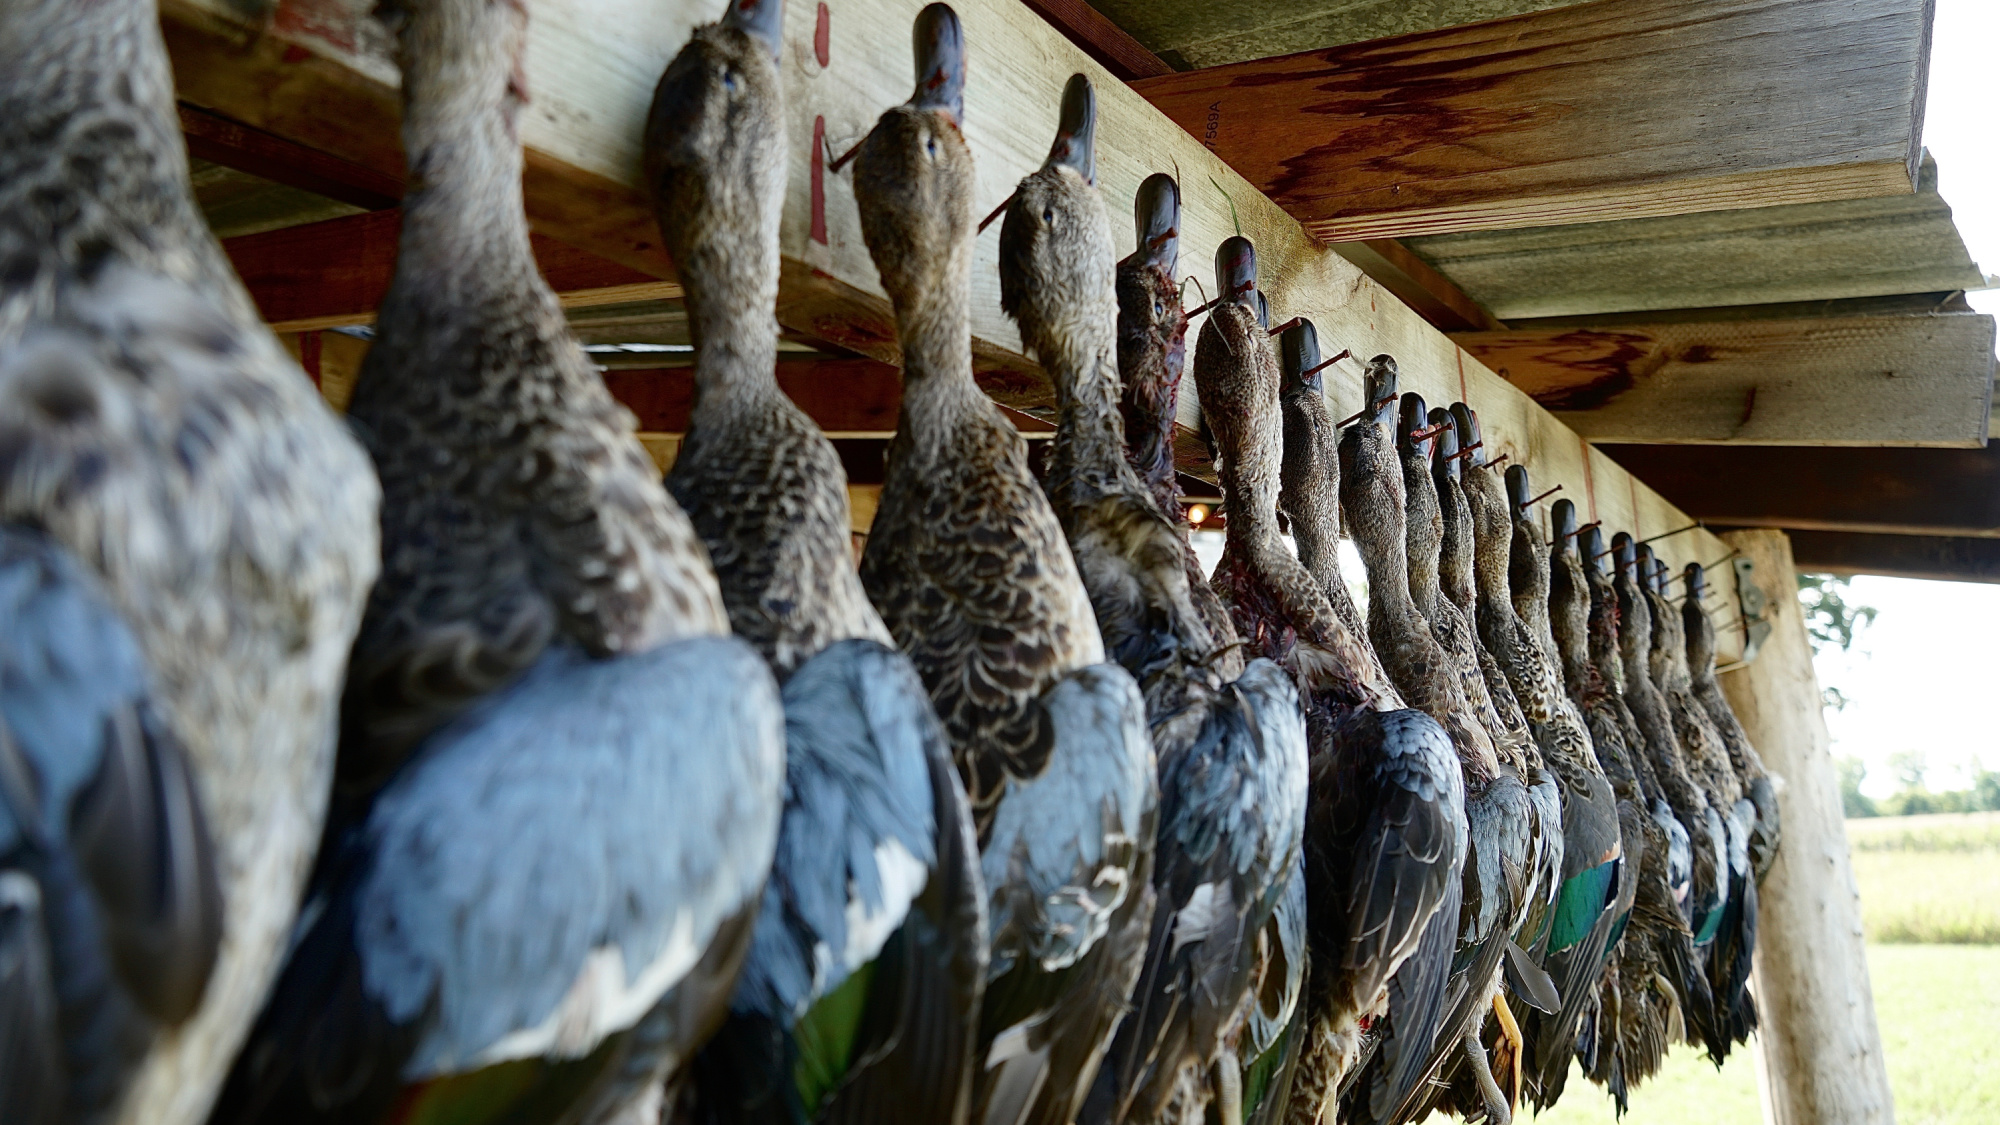 ducks hanging in barn